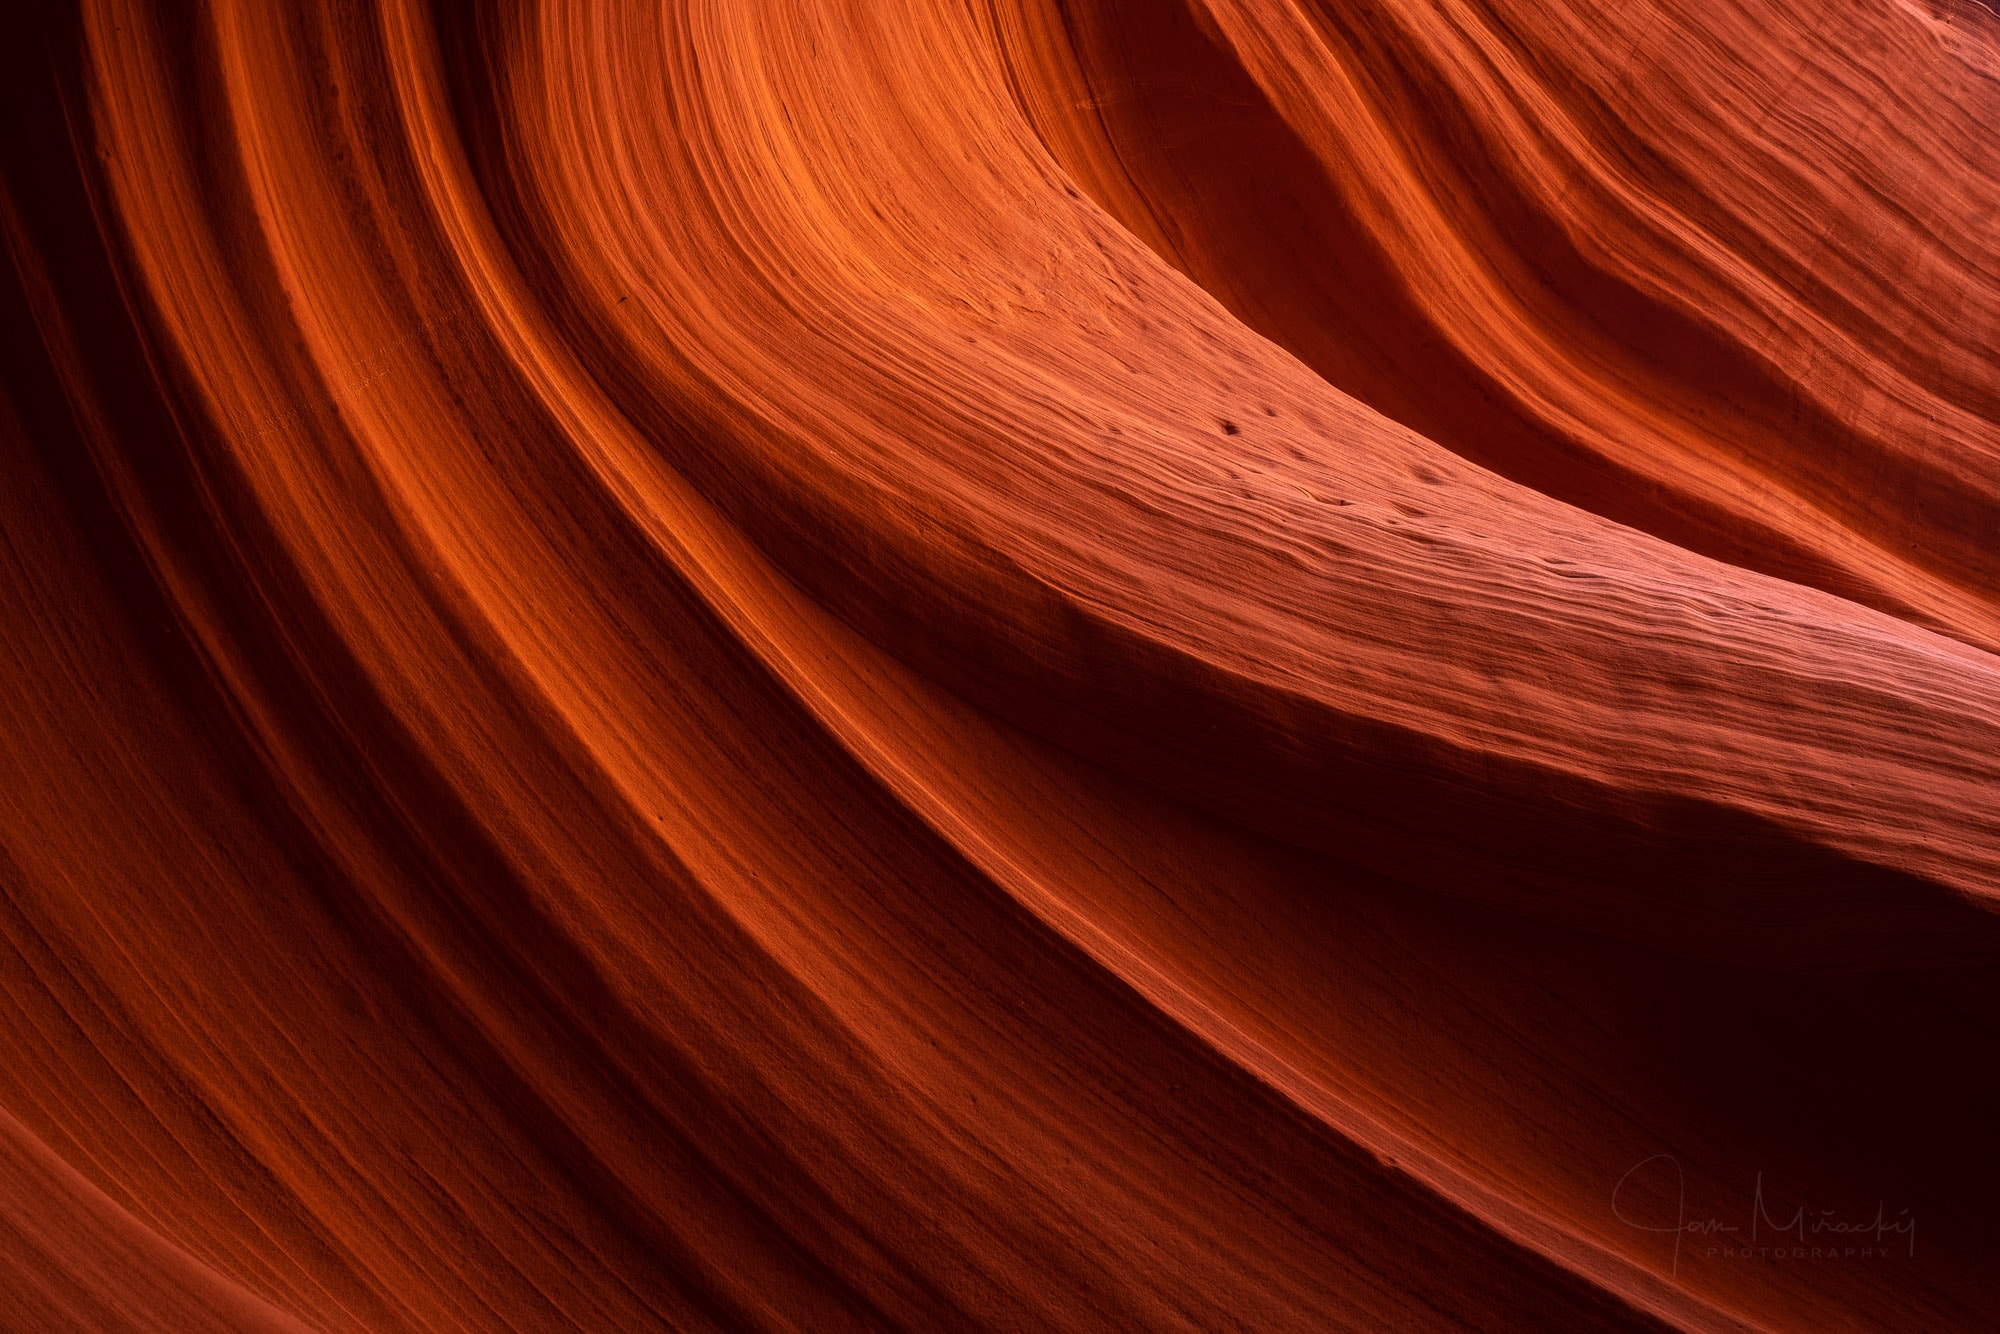 Abstract details of orange slot canyon wall, Arizona